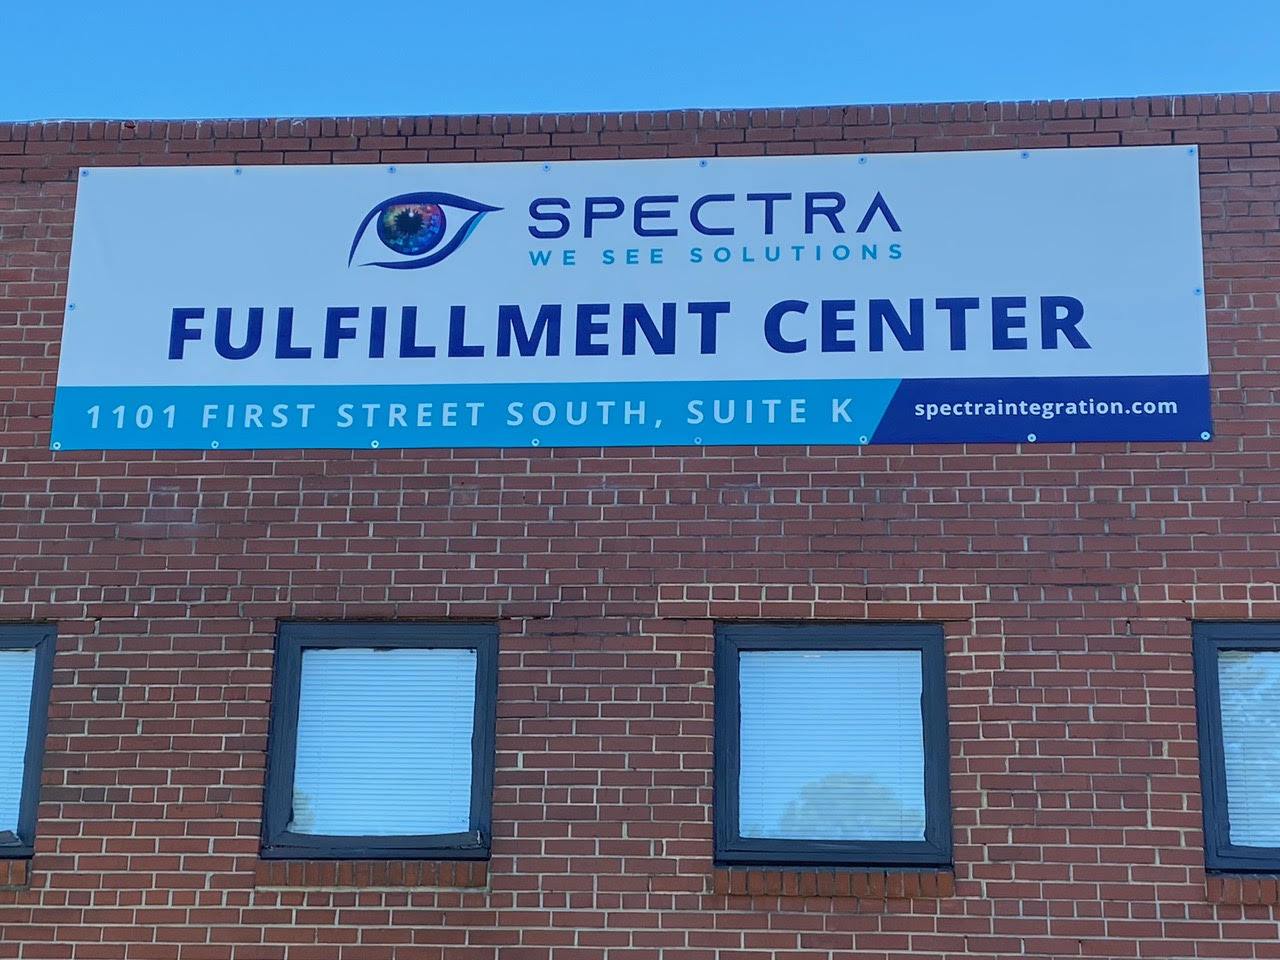 Spectra Fulfillment Center